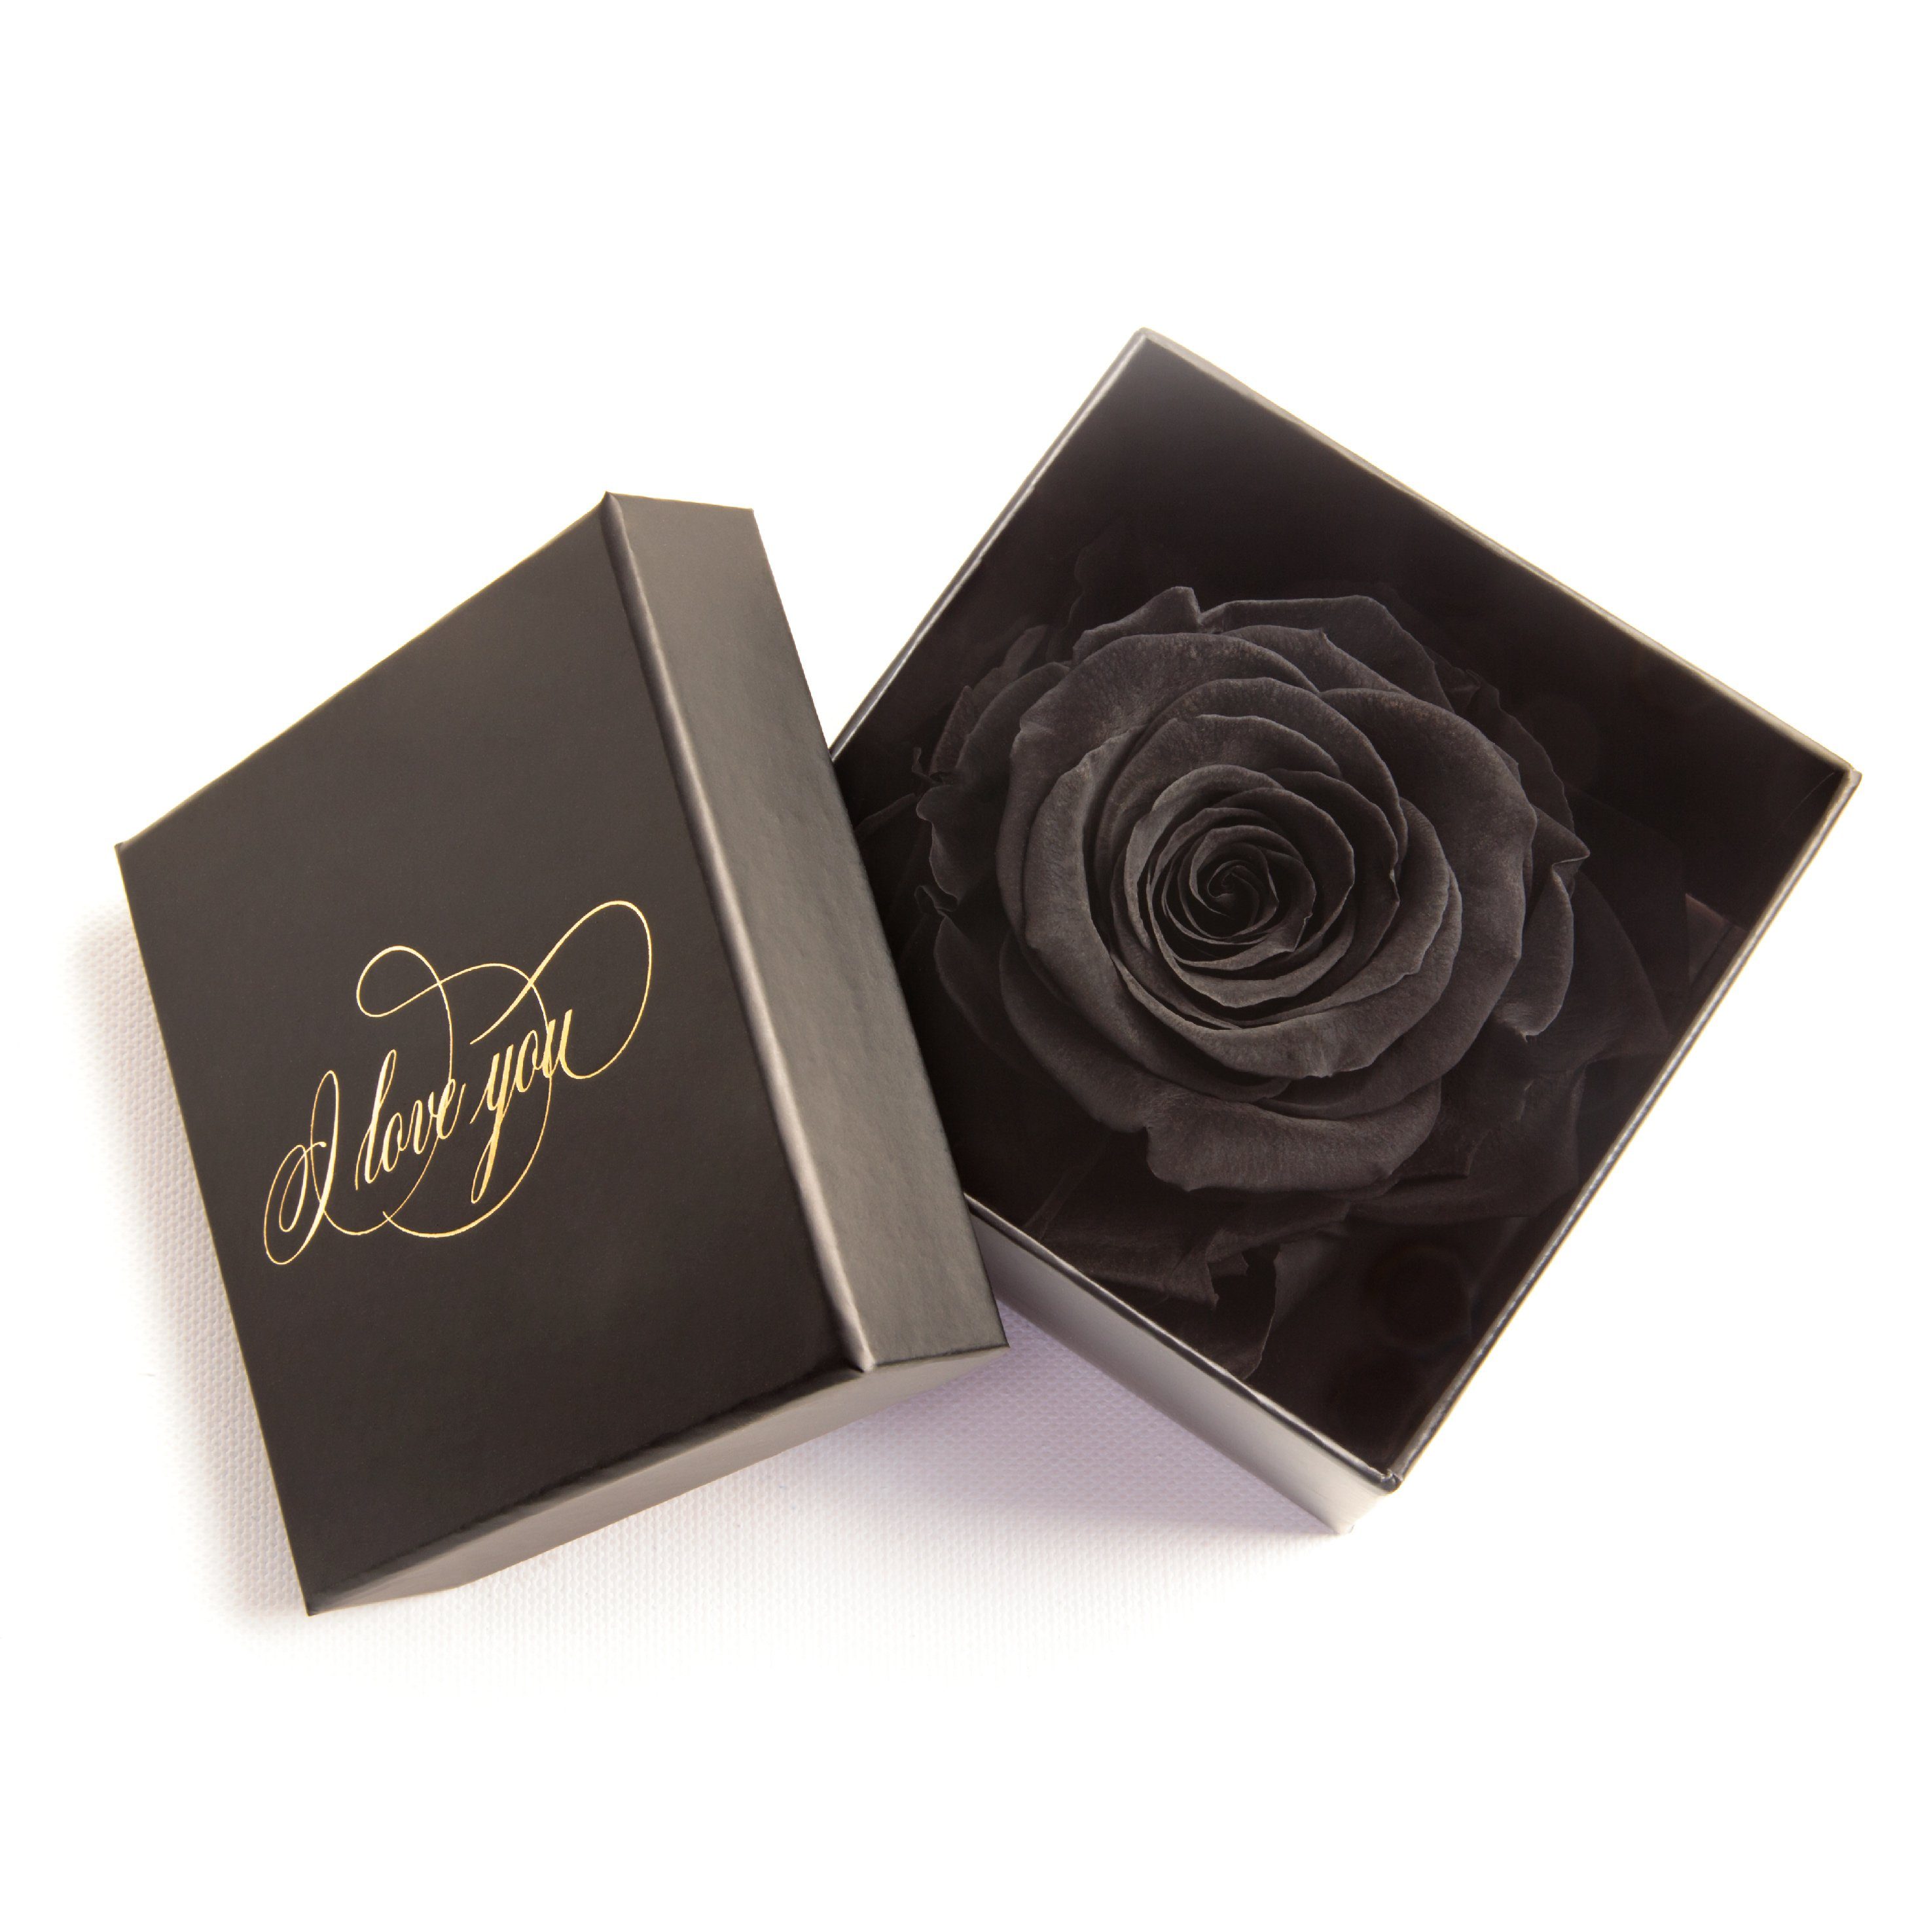 Kunstblume Infinity Rose Box I Love You Geschenk Idee Liebesbeweis Rose, ROSEMARIE SCHULZ Heidelberg, Höhe 6 cm, Echte Rose konserviert Schwarz